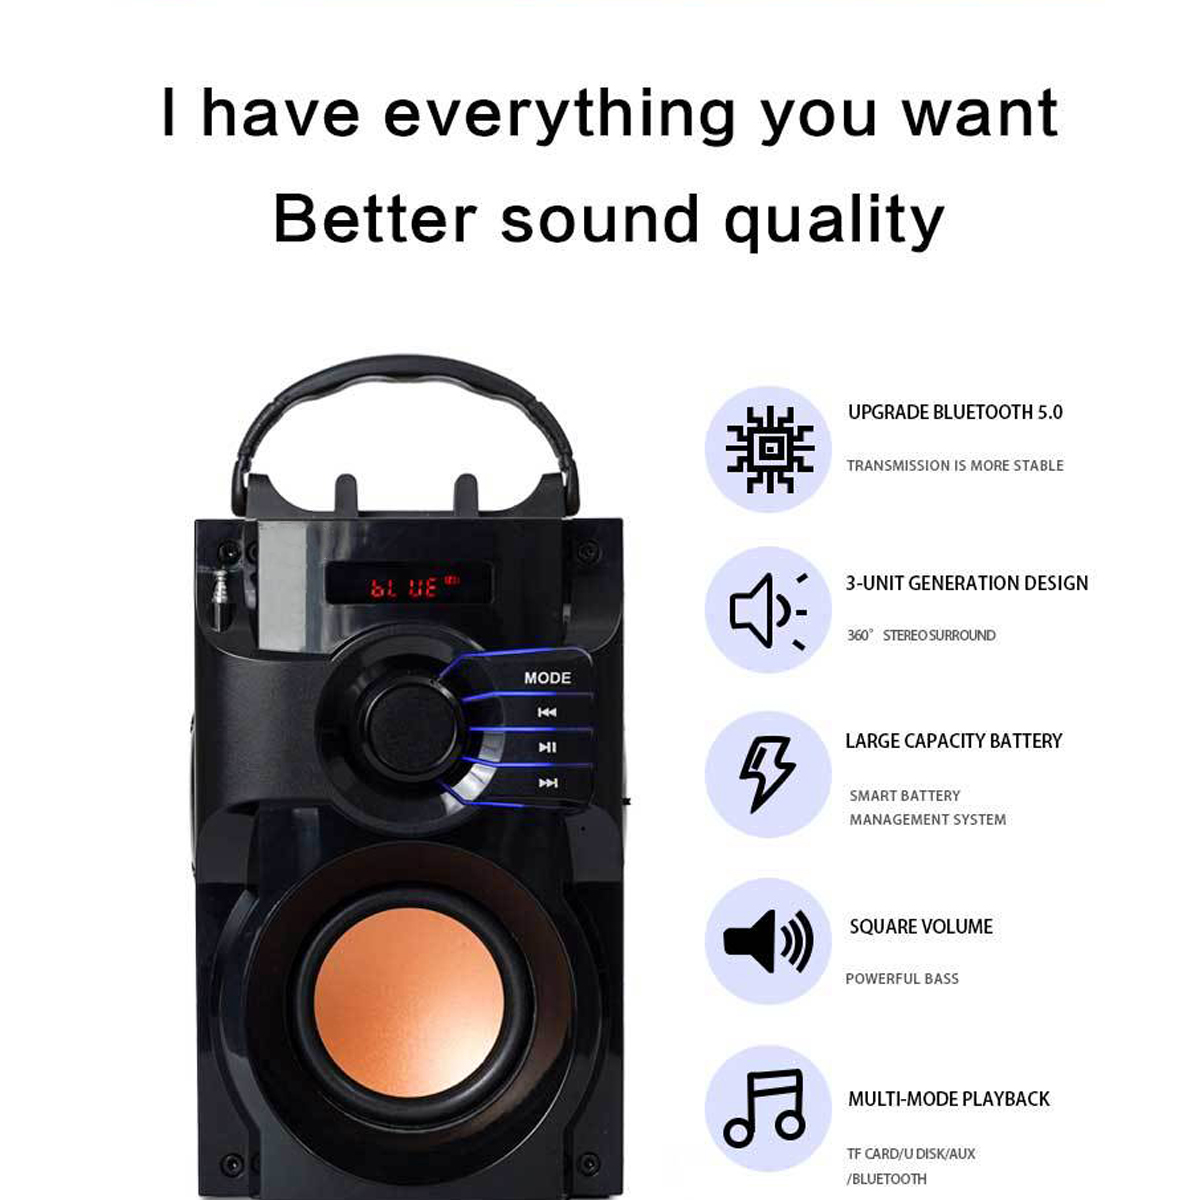 Outdoor-Lautsprecher, Orange Bluetooth-Lautsprecher Tragbarer Plug-in Lautsprecher Lautsprecher, ENBAOXIN Kabelloser Mini